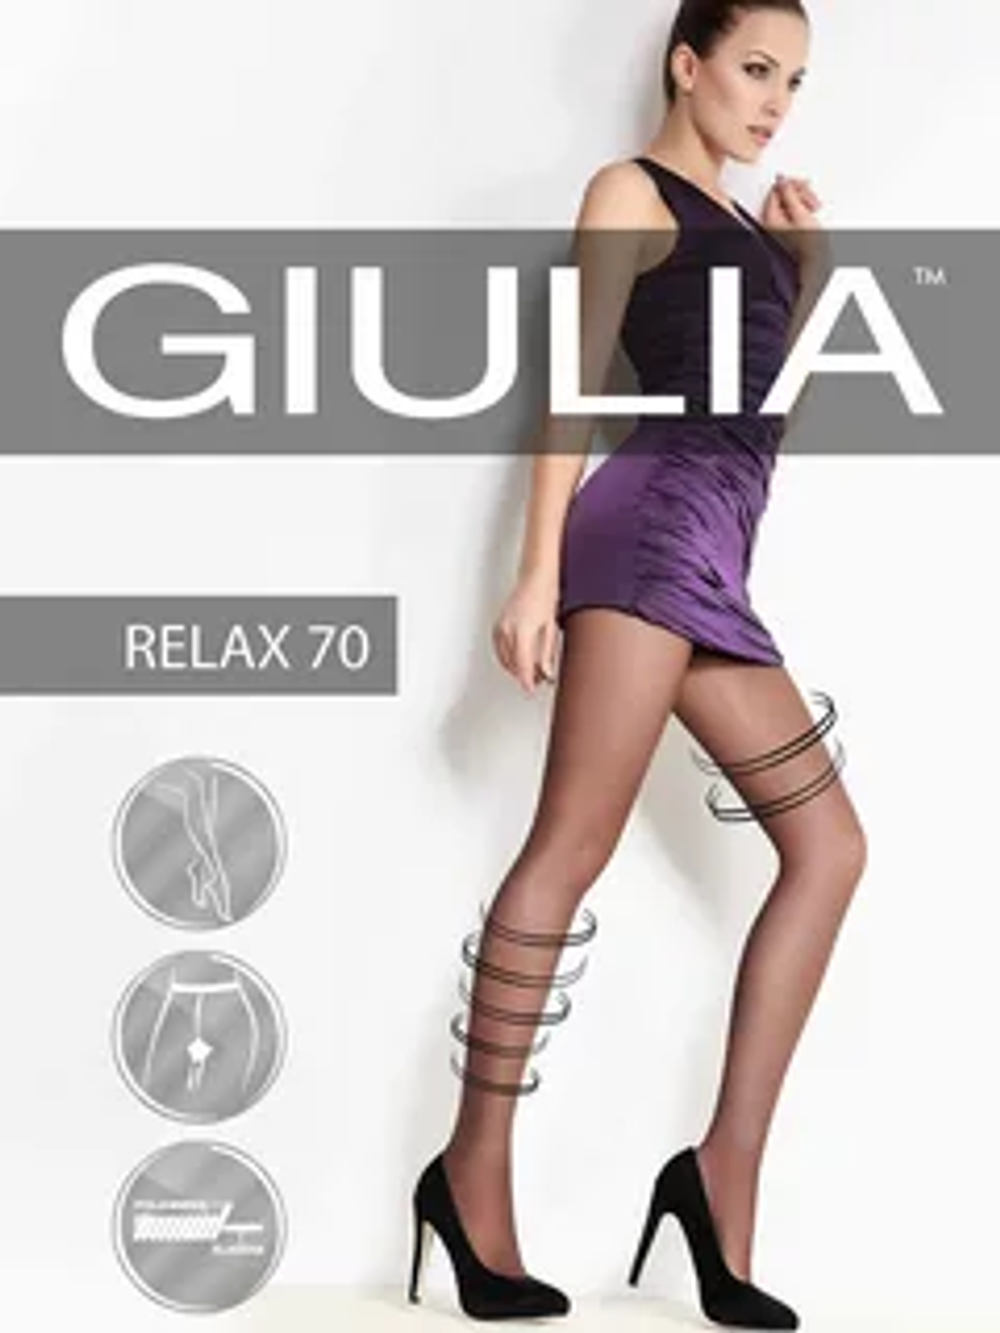 Kолготки Relax 70 Giulia